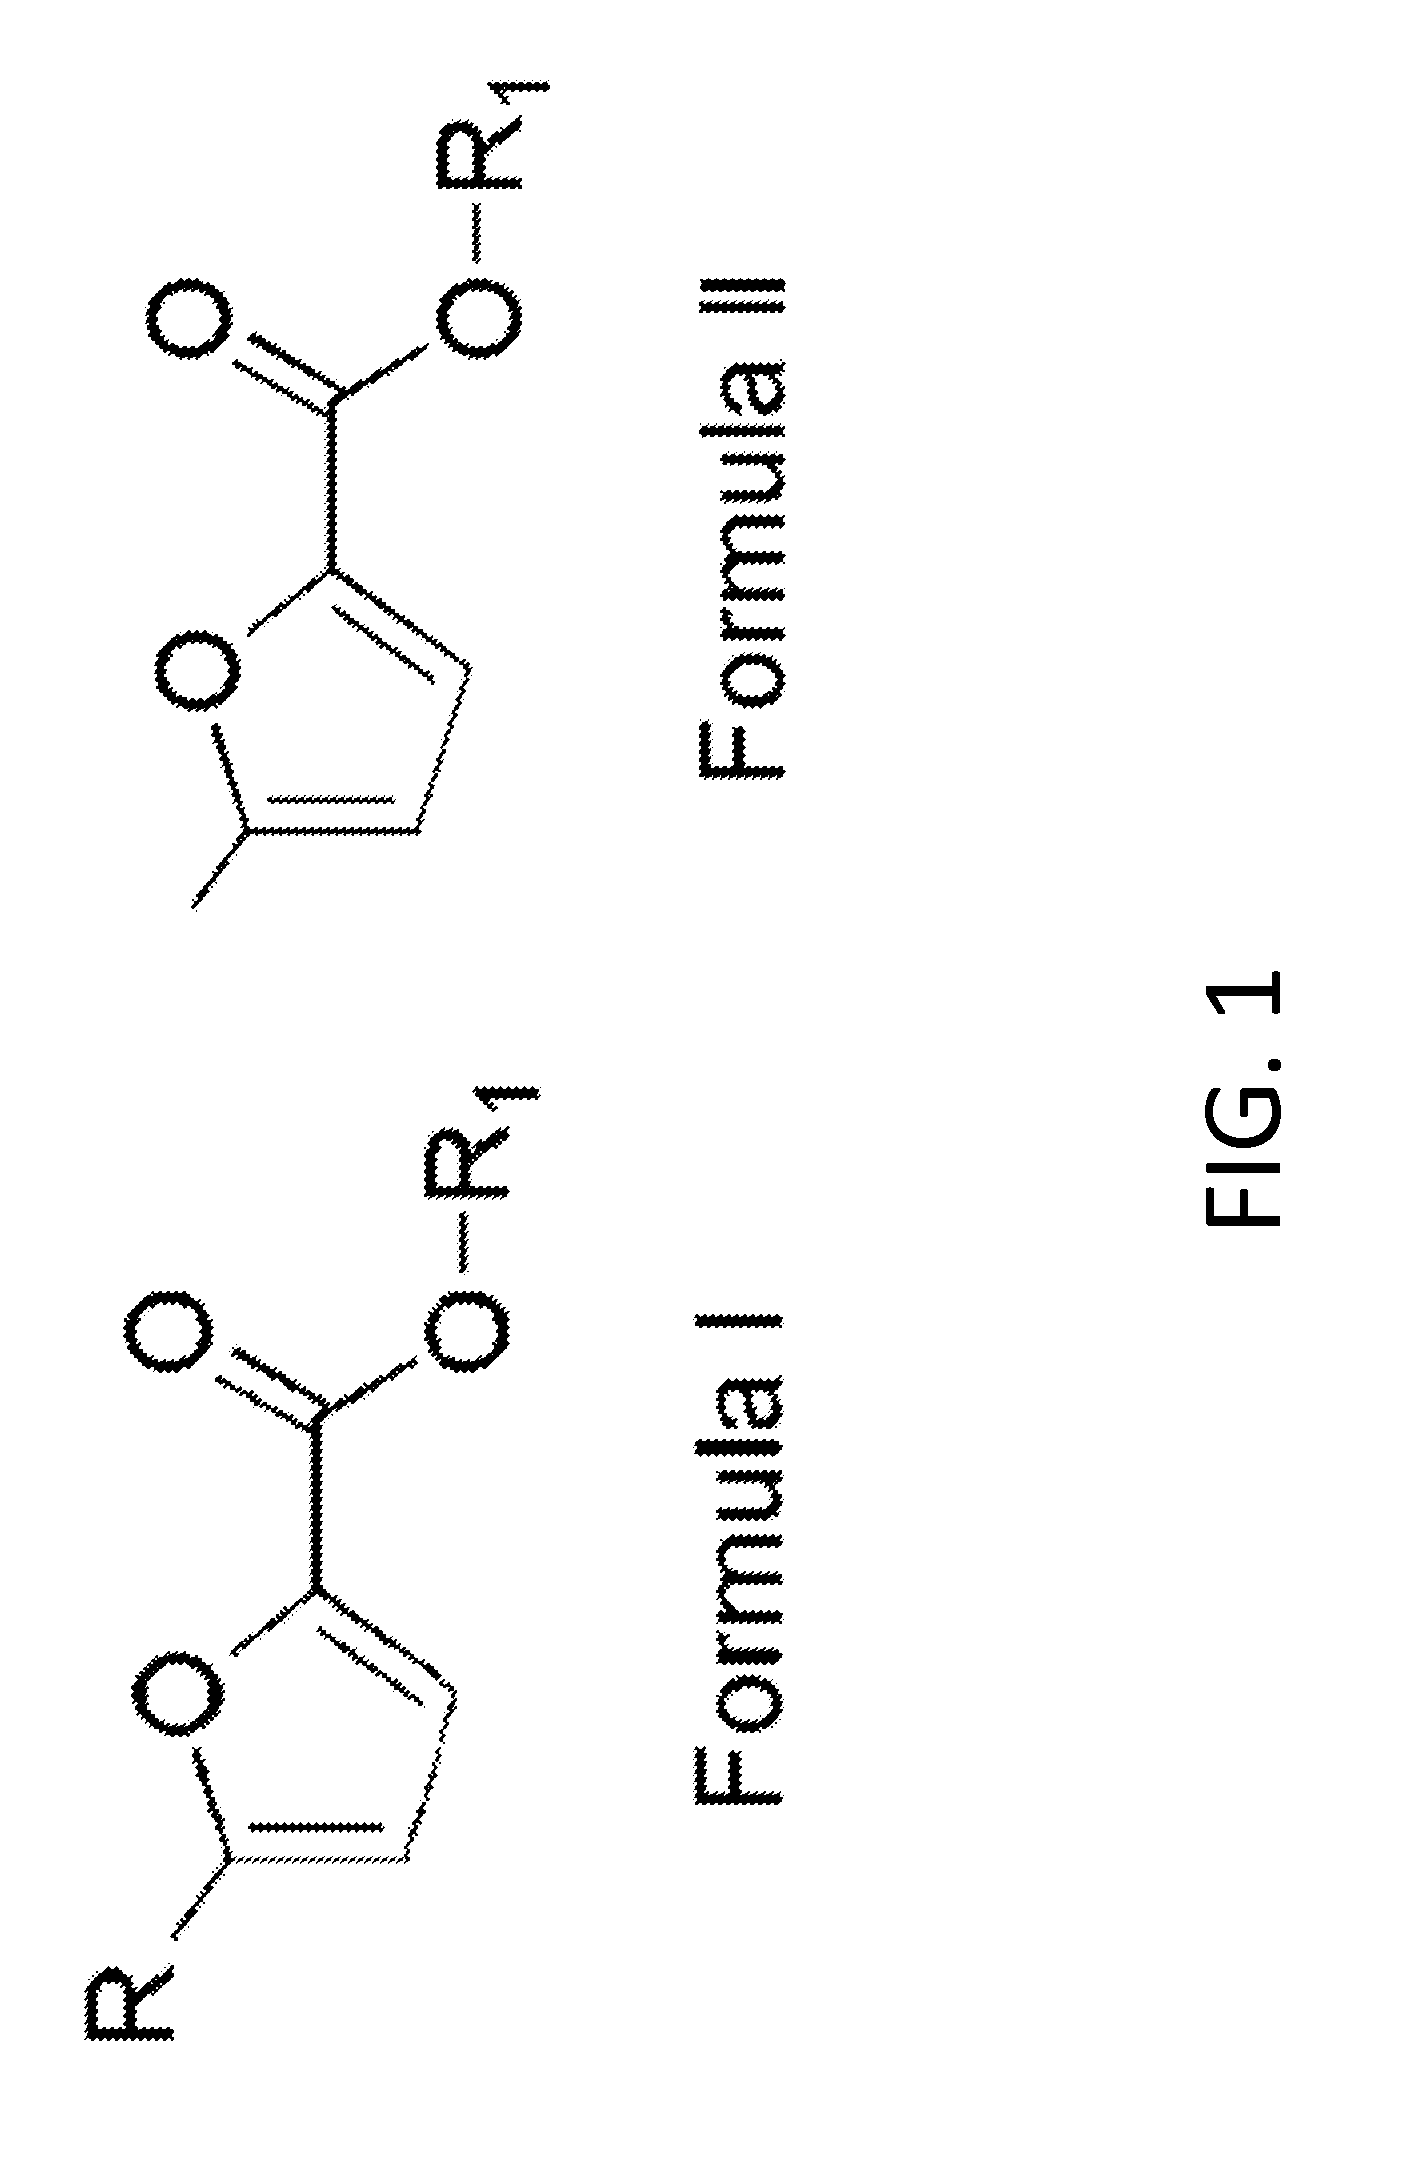 Fuels and fuel additives comprising ester derivatives of 5-methyl-2-furoic acid